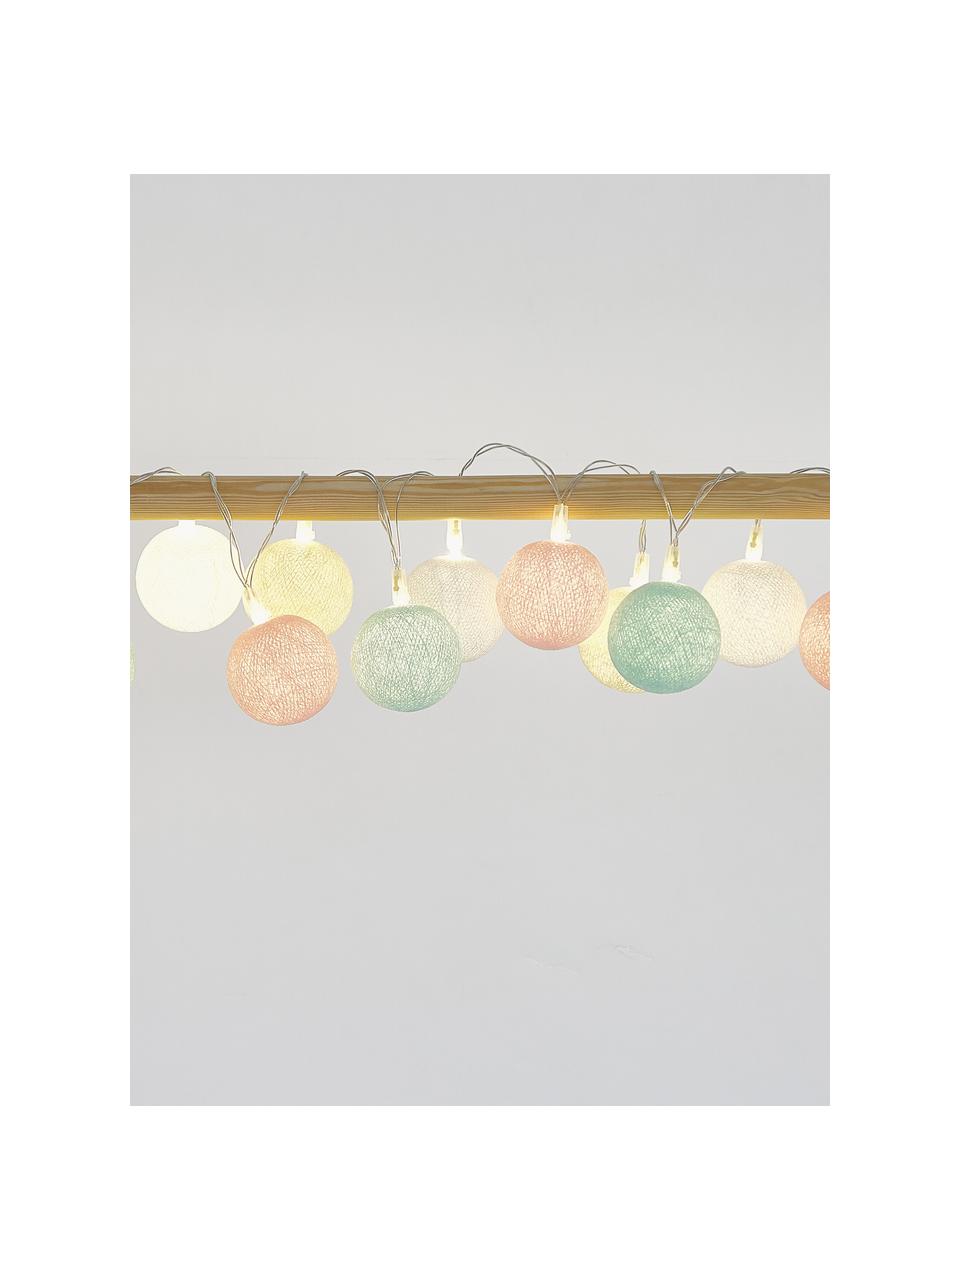 LED lichtslinger Colorain, 378 cm, Lampions: polyester, WFTO gecertifi, Wit, lichtblauw, lichtroze, lichtgeel, L 378 cm